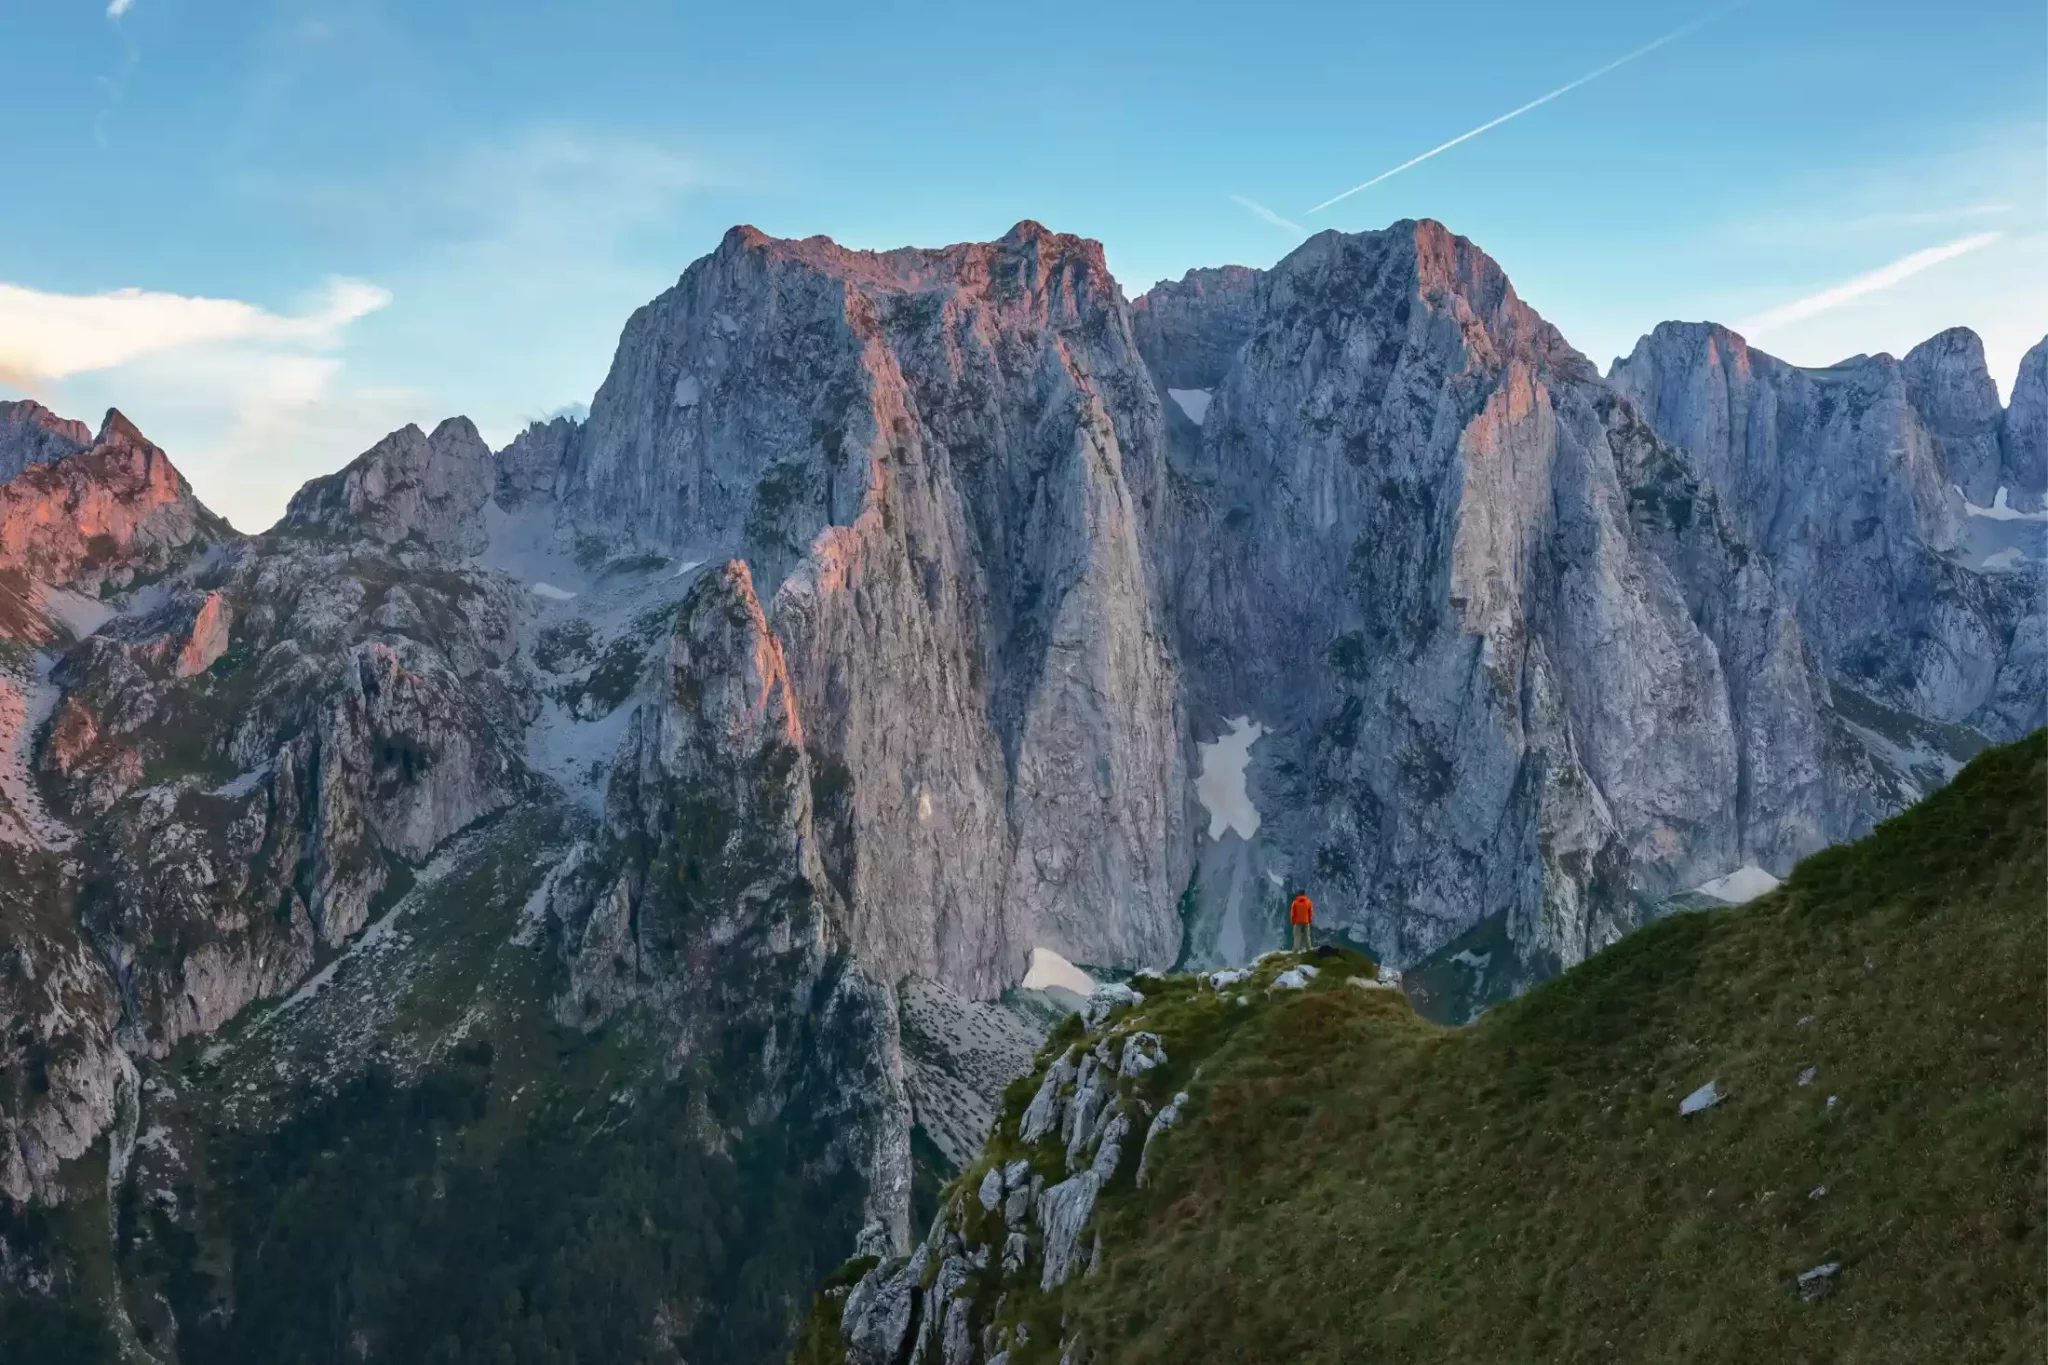 Prokletije Mountain range in Montenegro